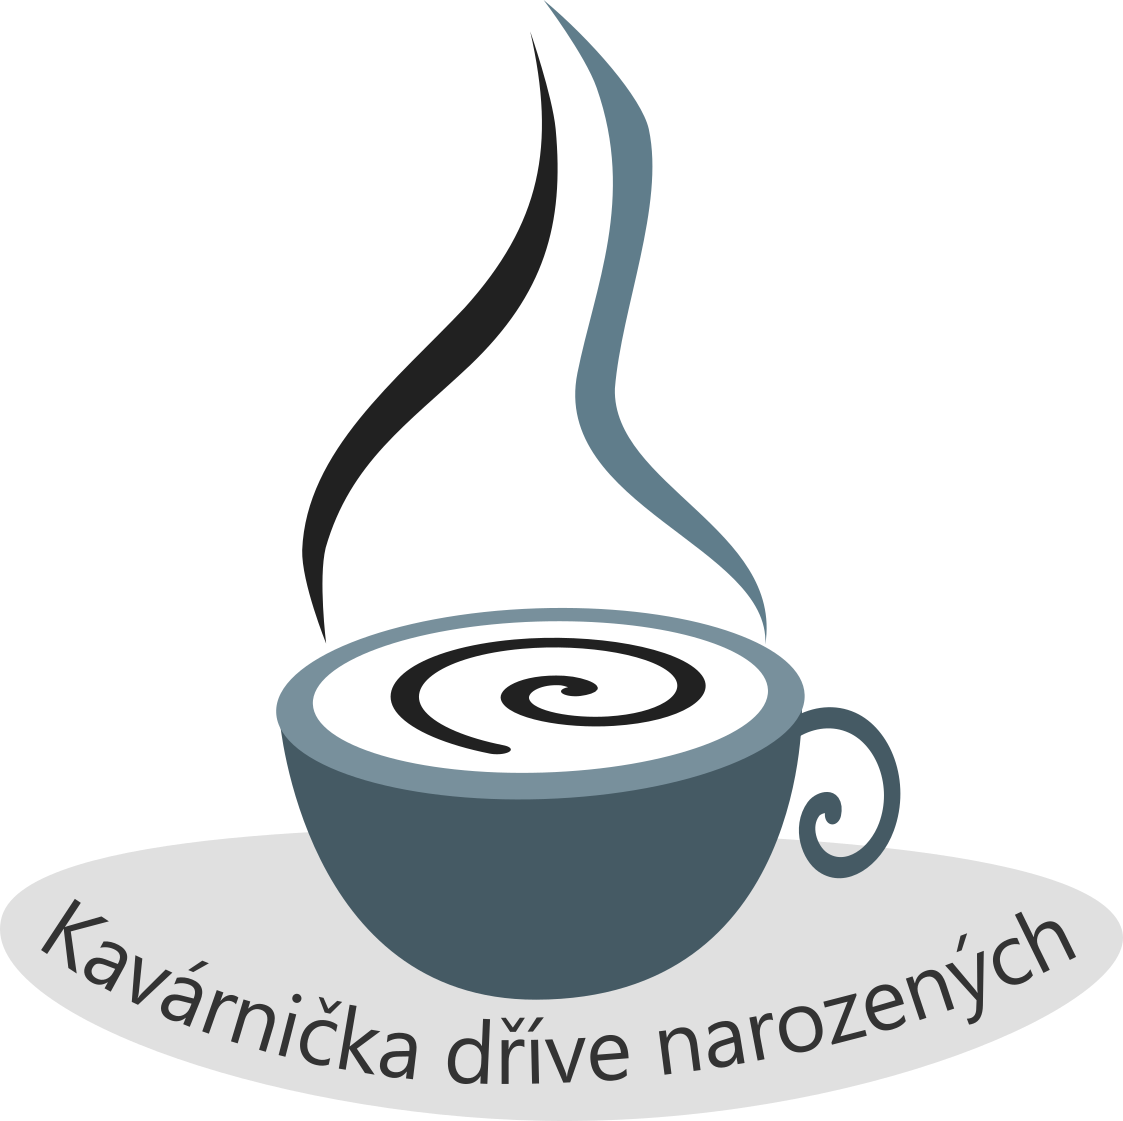 kavarnicka_logo_v2_300dpi.png